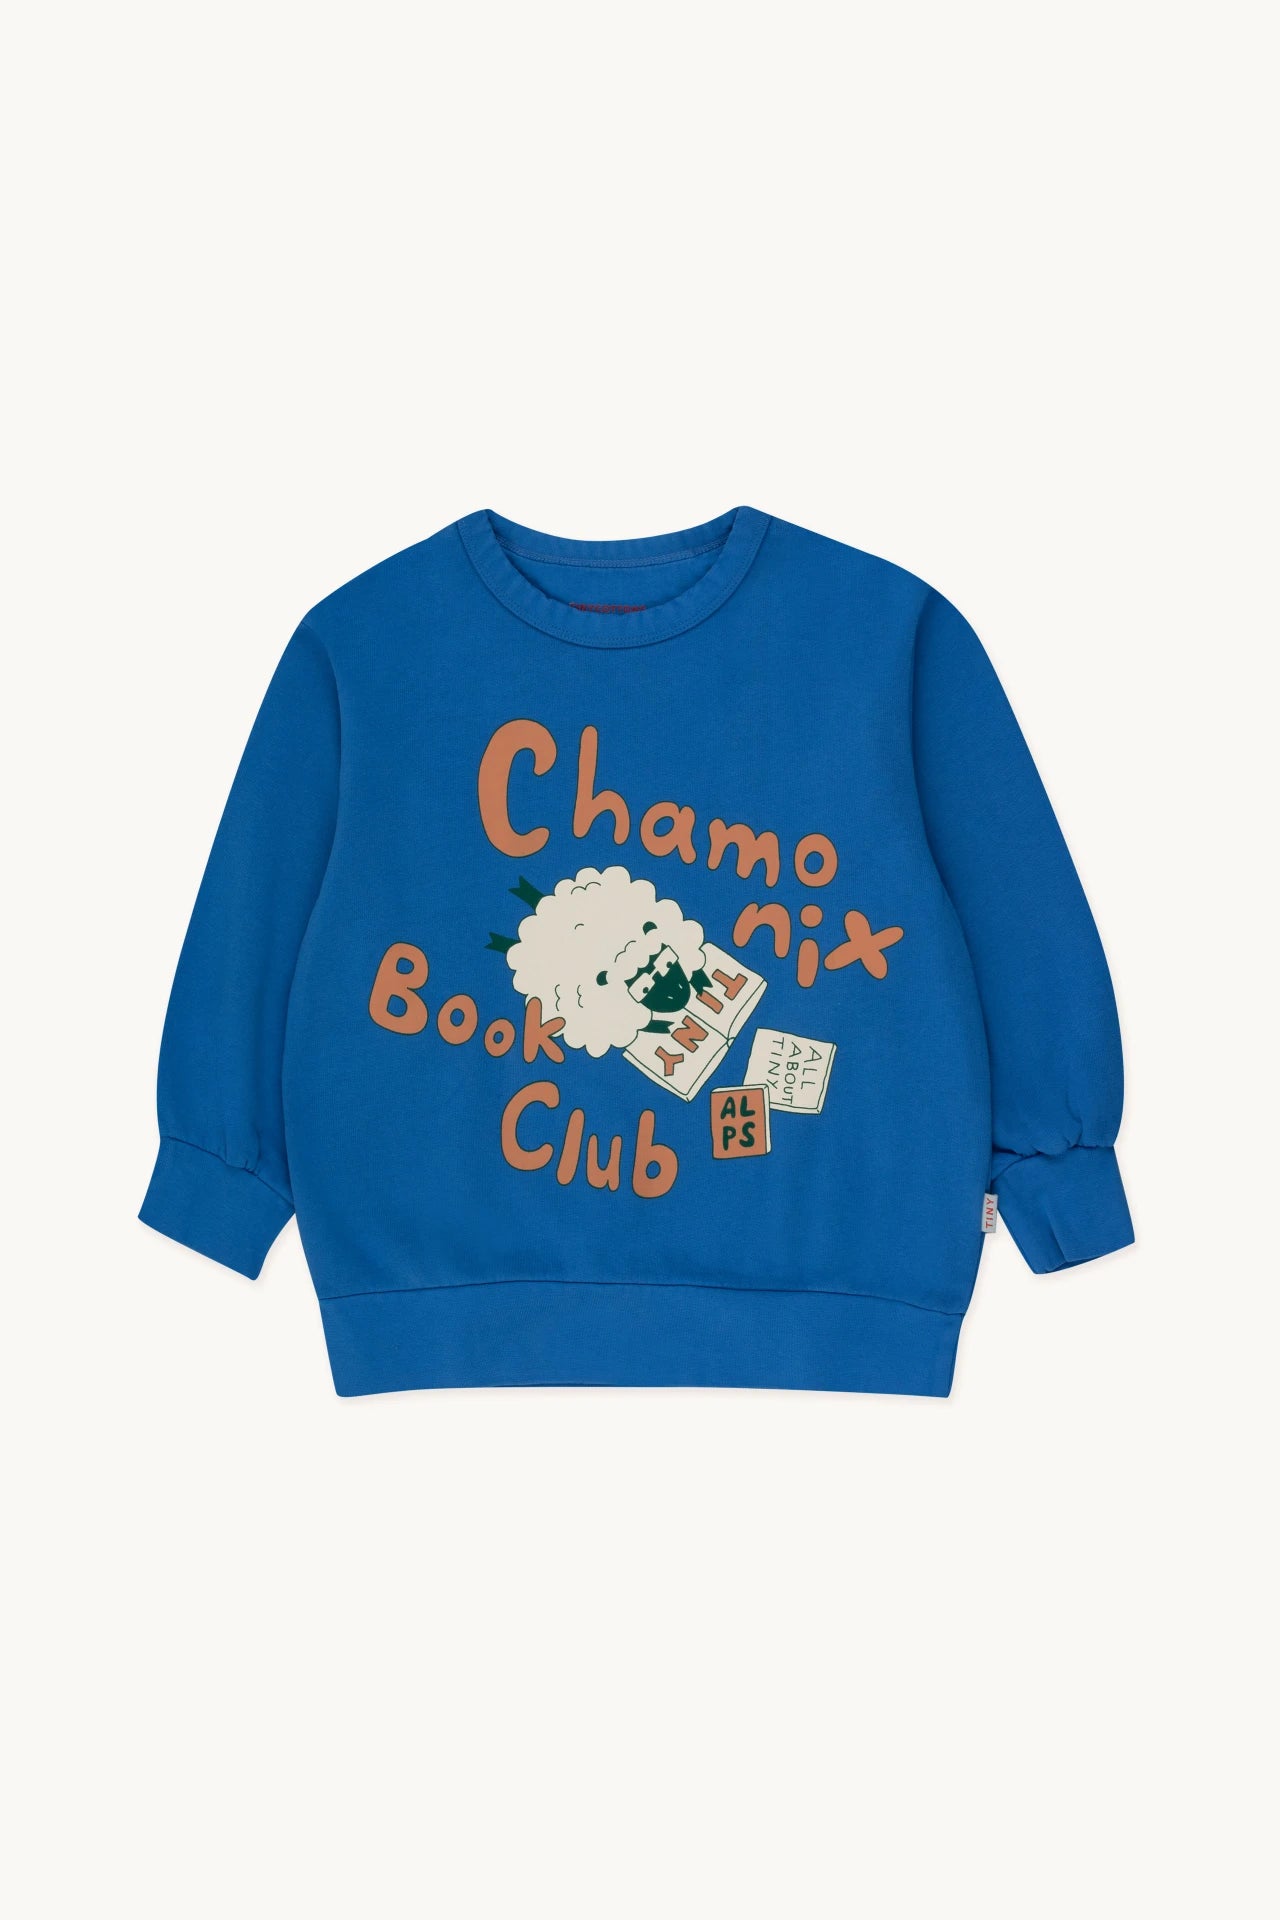 Tiny Cottons Book Club Sweatshirt - blue